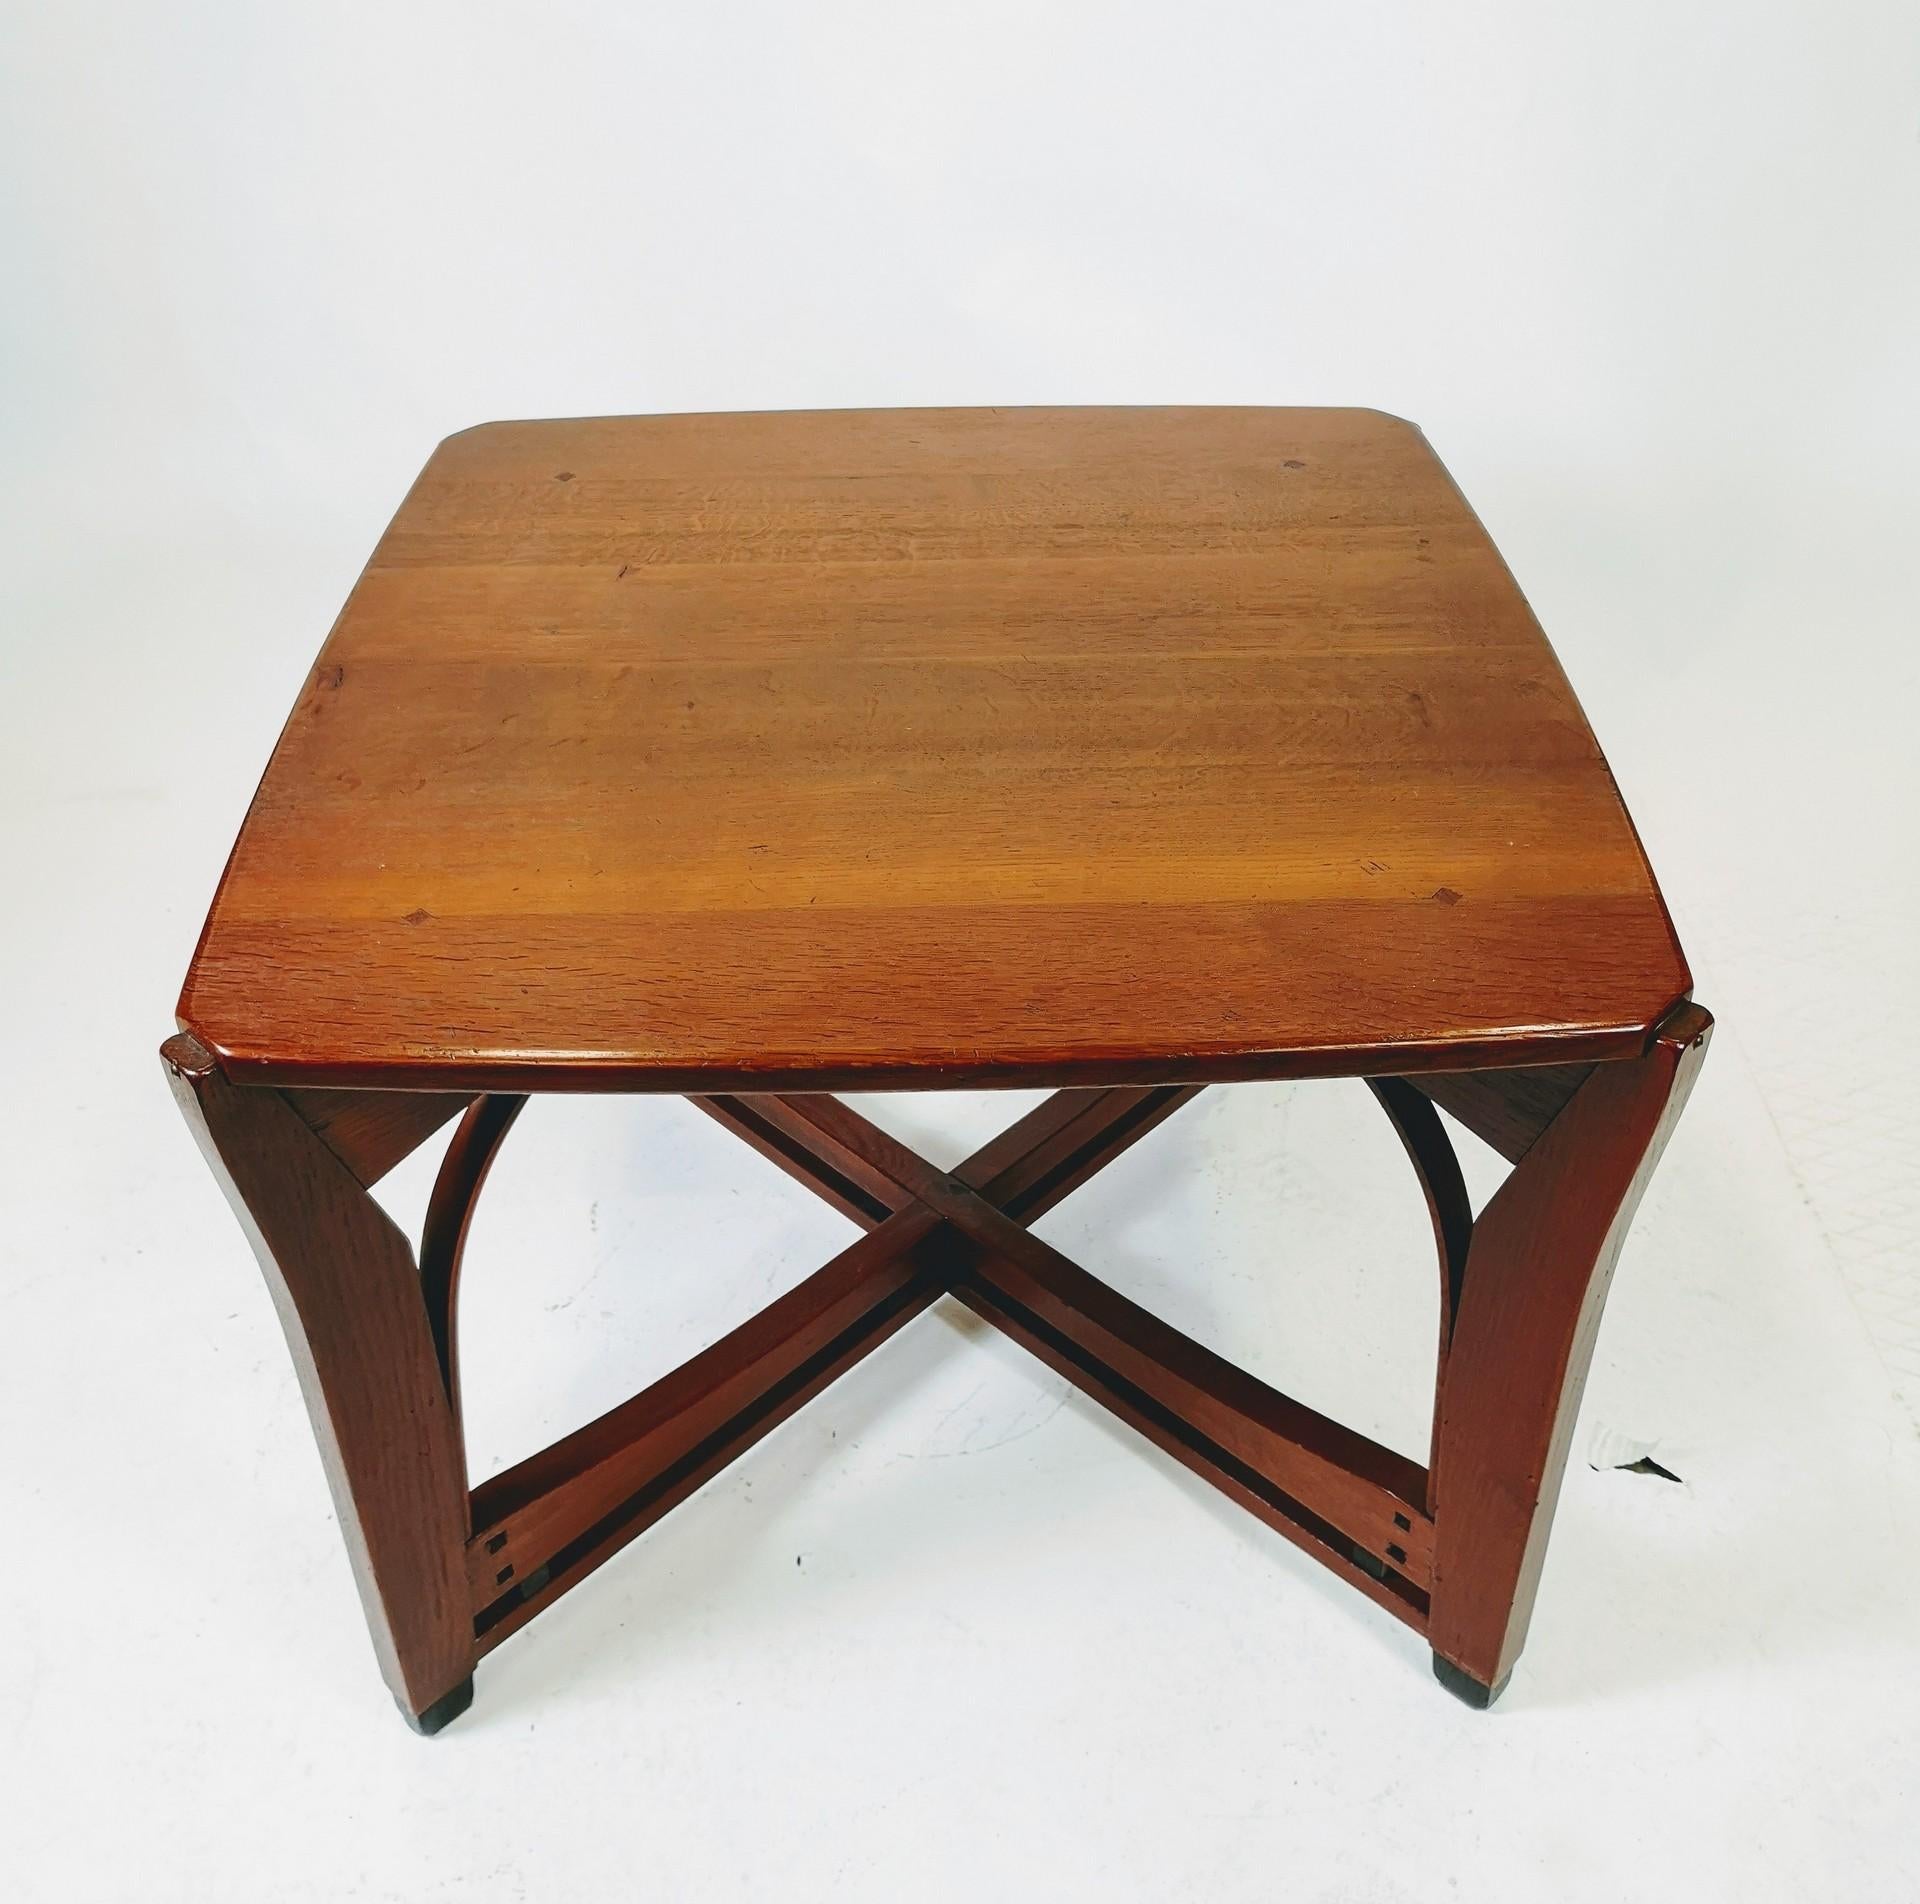 European Art Nouveau Style Wooden Coffee Table by Schuitema & Zonen